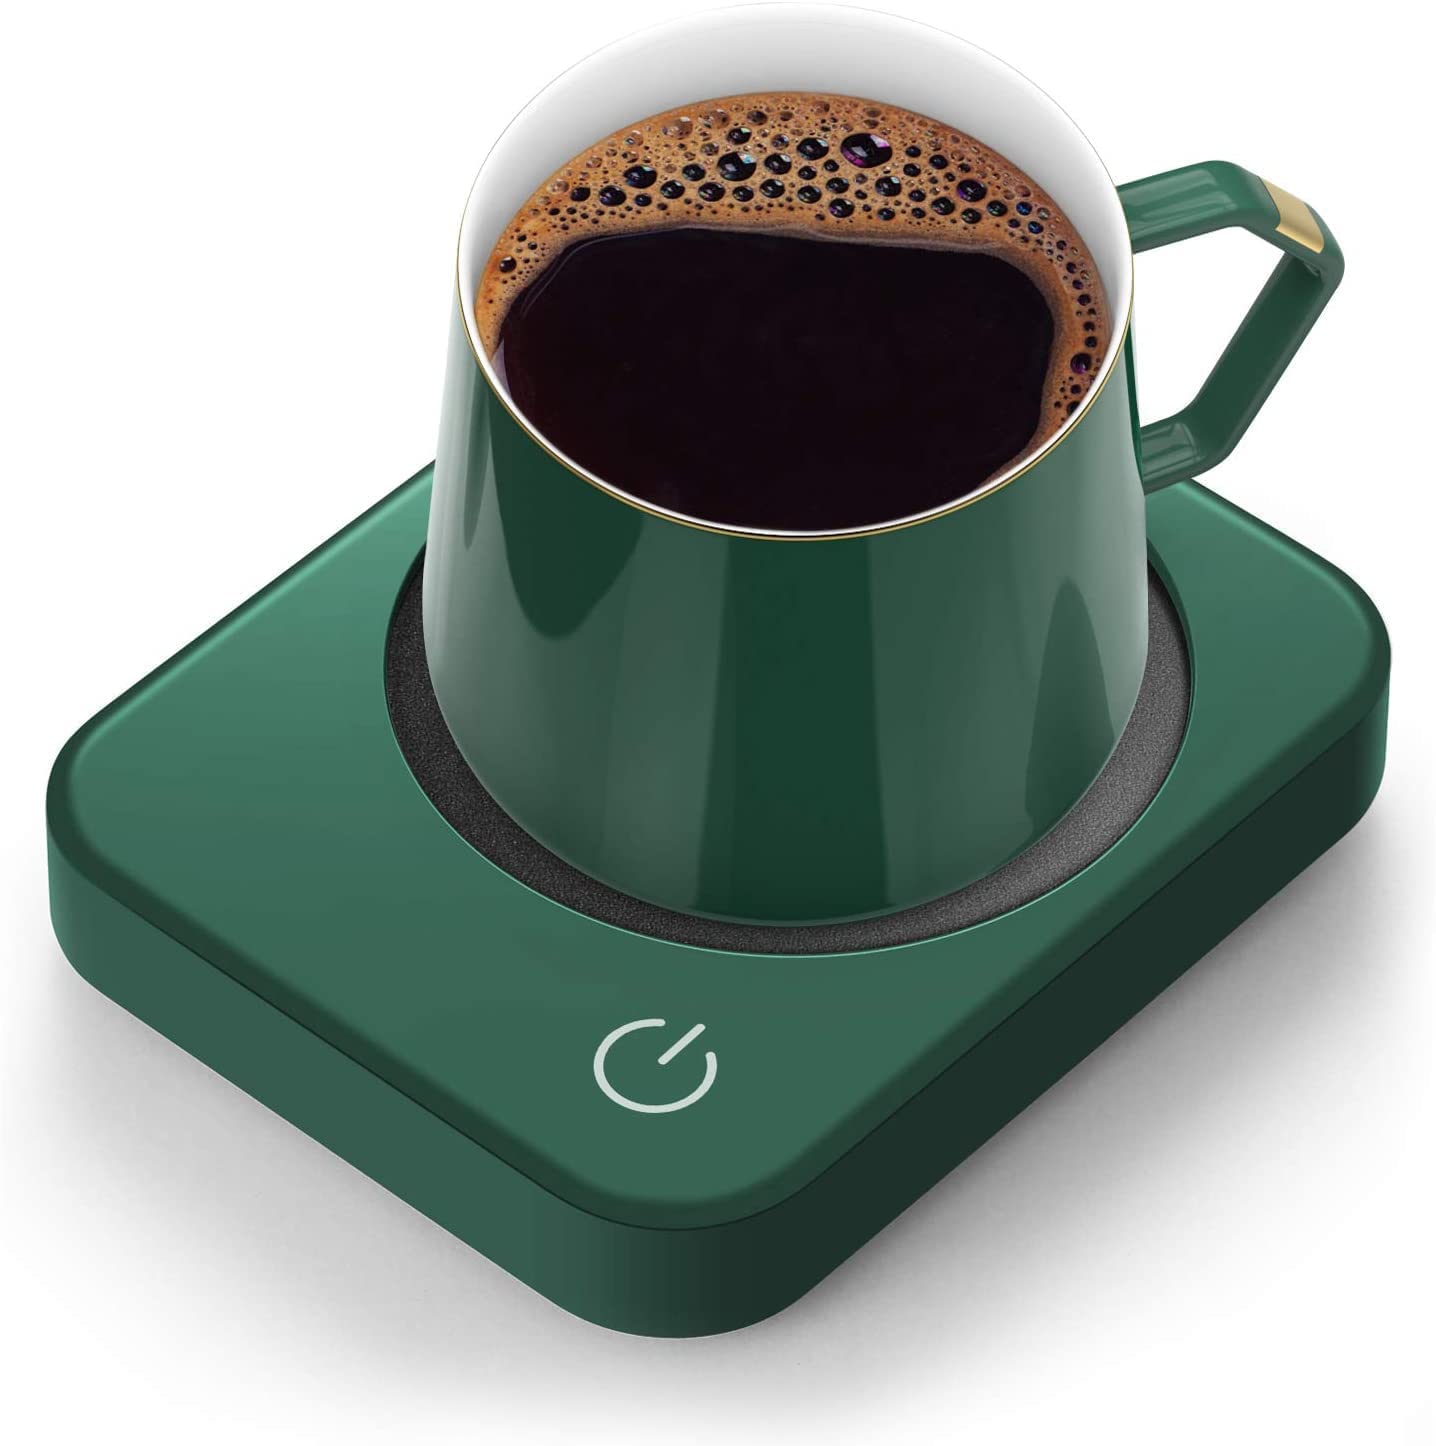 NiceLucky Coffee Mug HEATER Temperature Control On/Off Glass Top